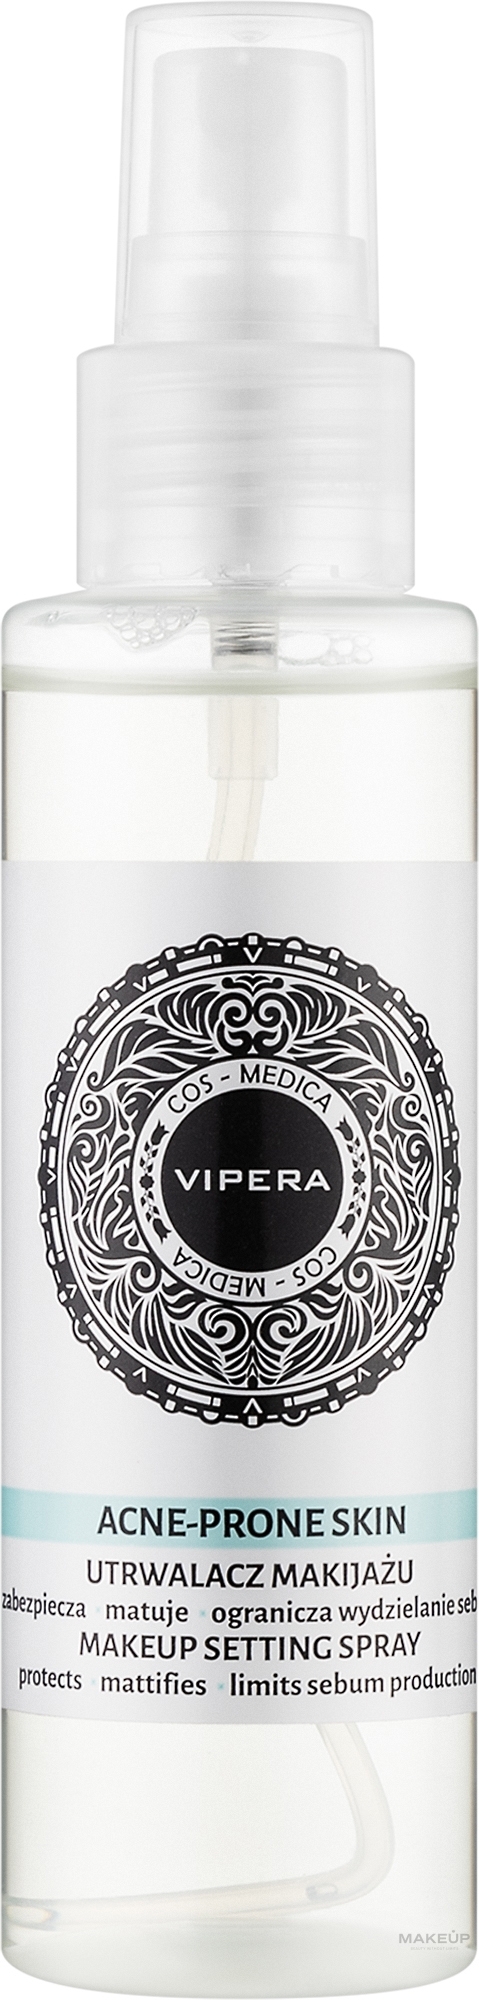 Makeup Fixing Spray - Vipera Cos-Medica Acne-Prone Skin Makeup Setting Spray — photo 100 ml